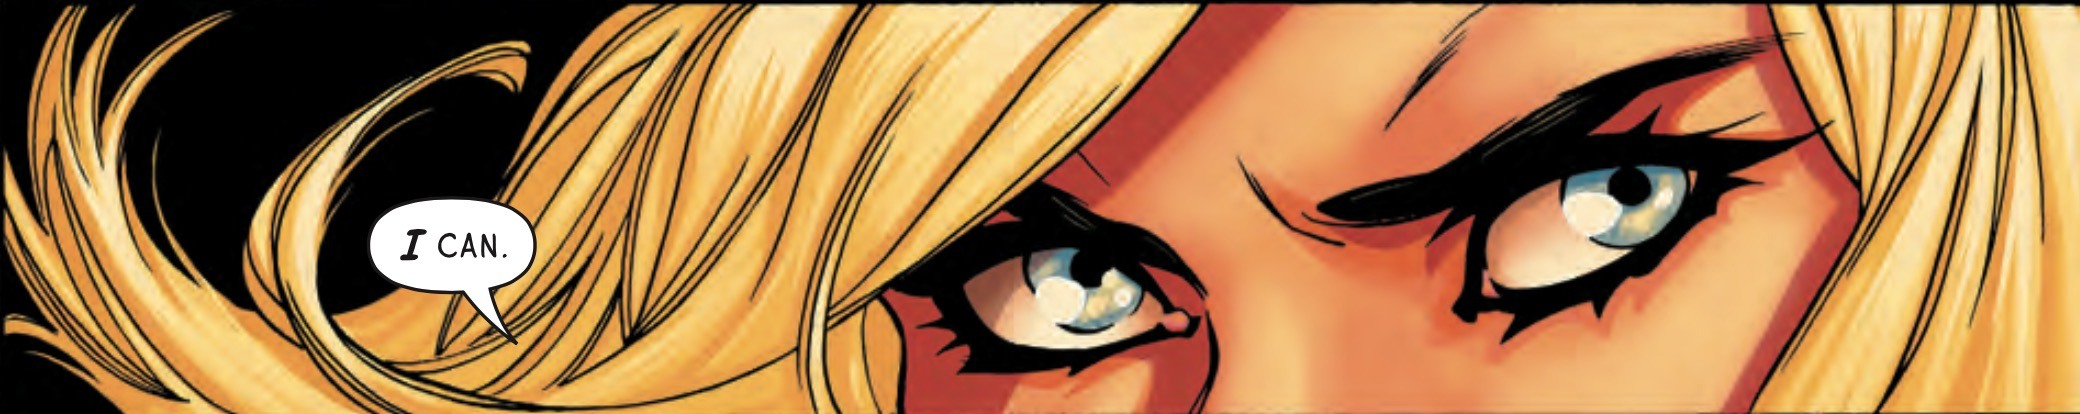 Supergirl #1 Panel 3